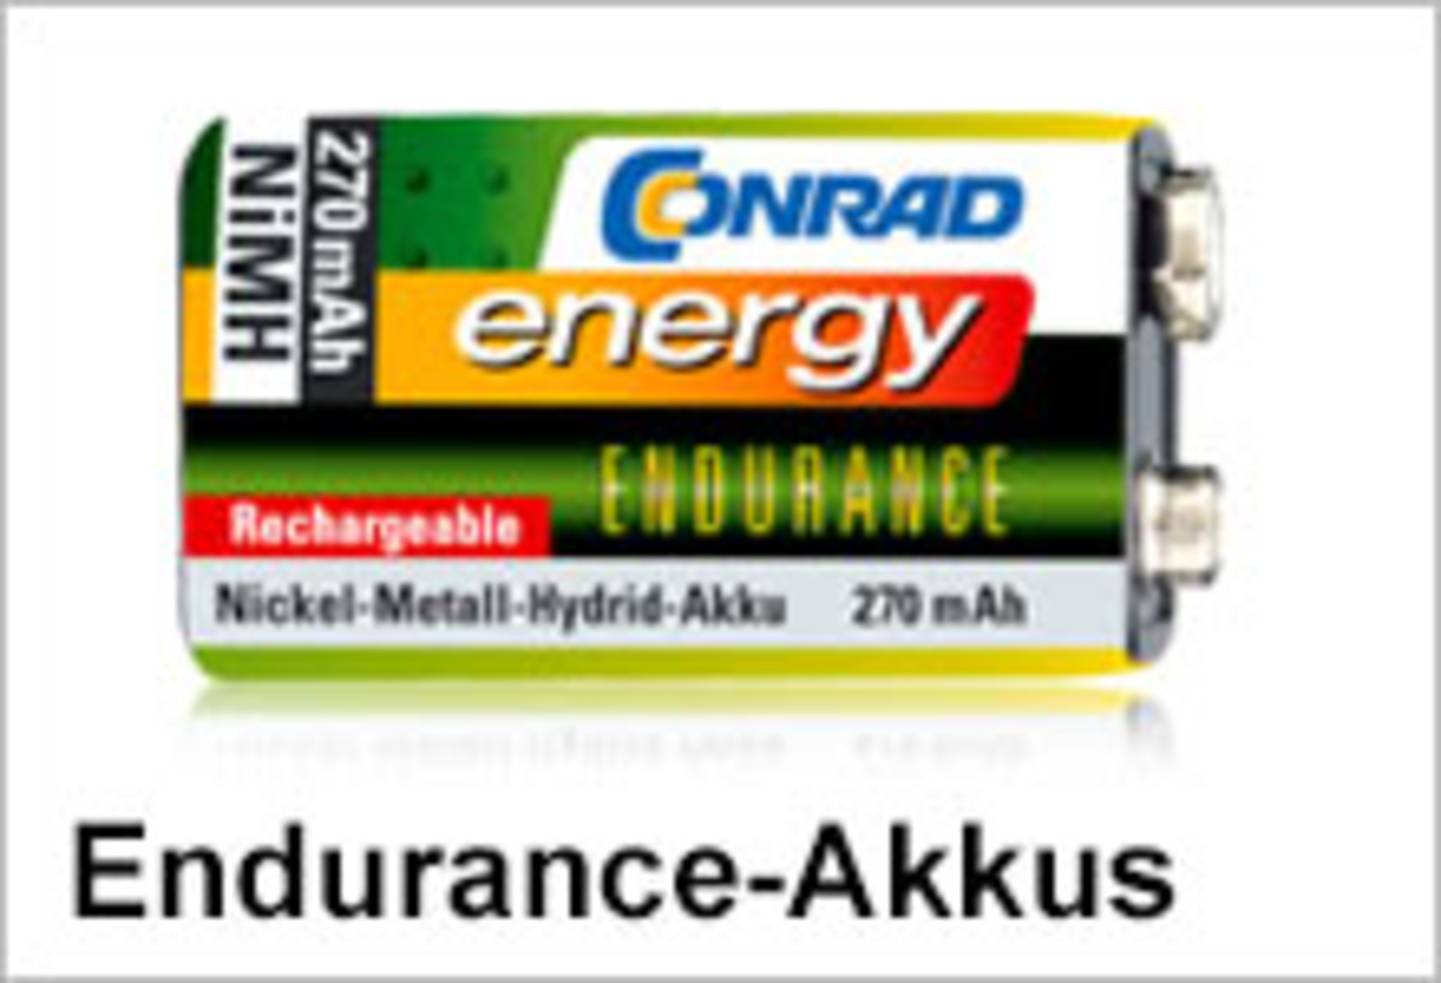 Conrad Energy Endurance-Akkus